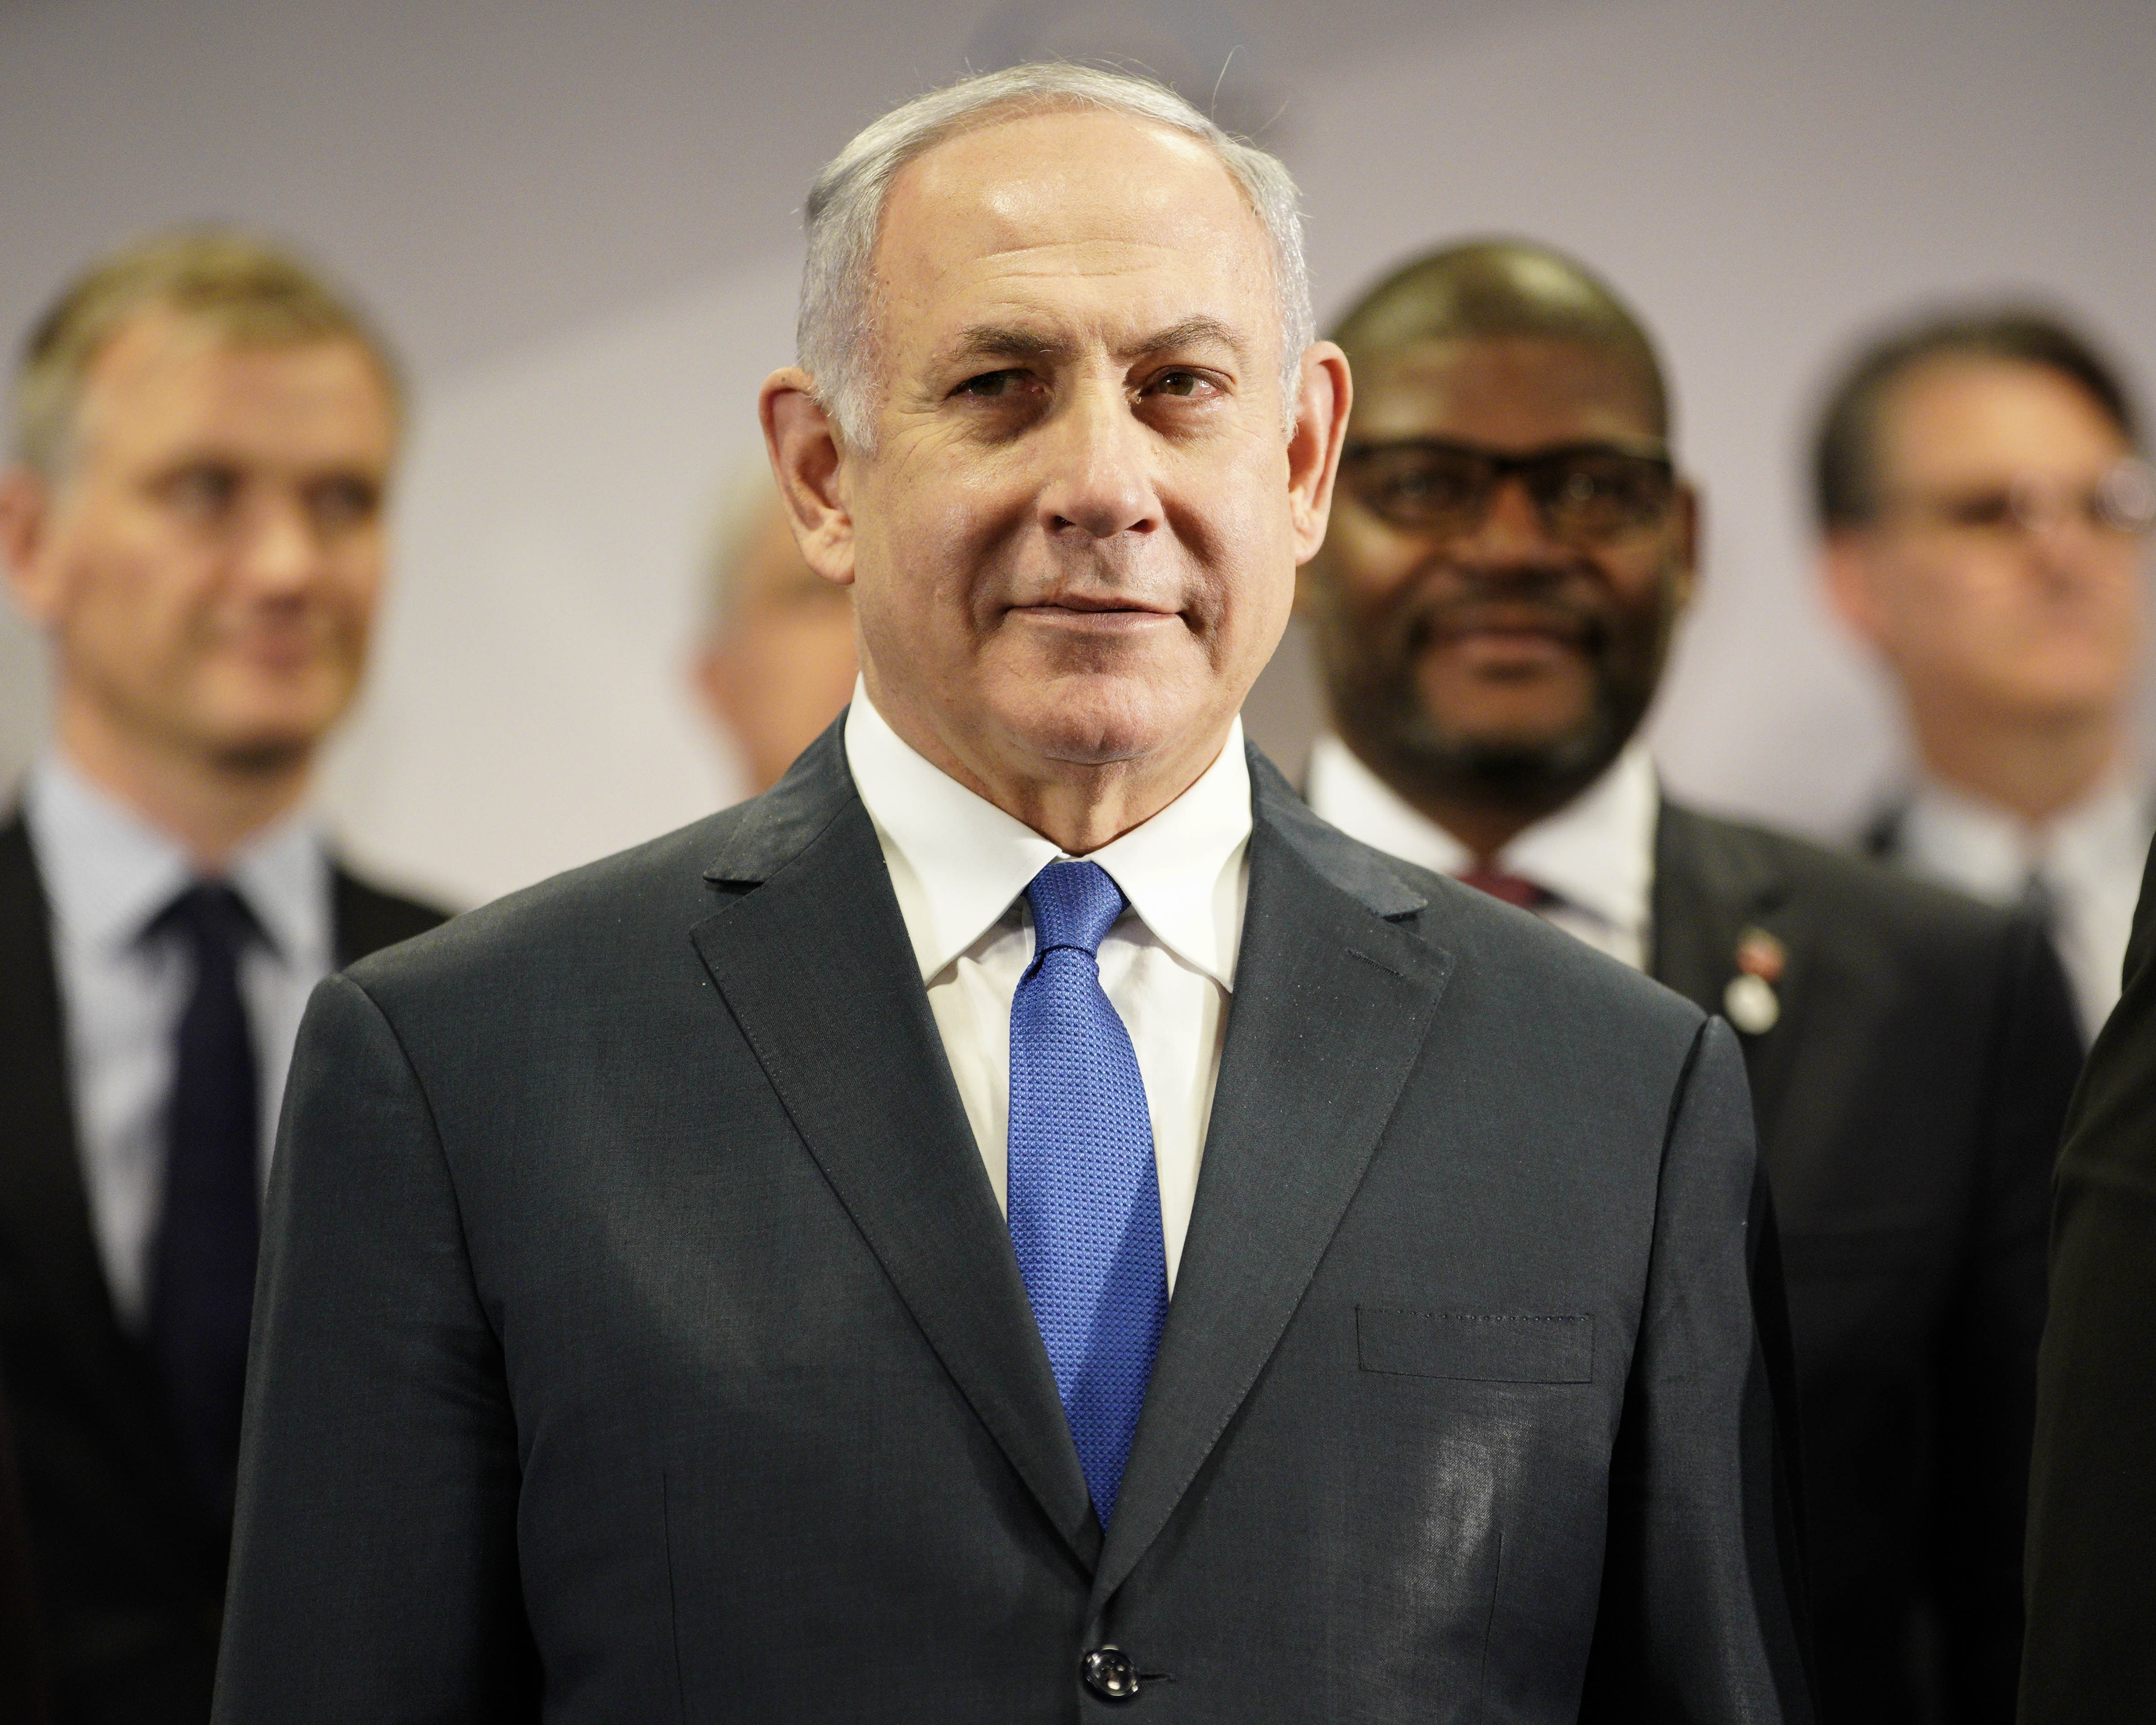 UPDATE 1-Netanyahu warns Iran it is within range of Israeli air strikes, citing Iranian threats